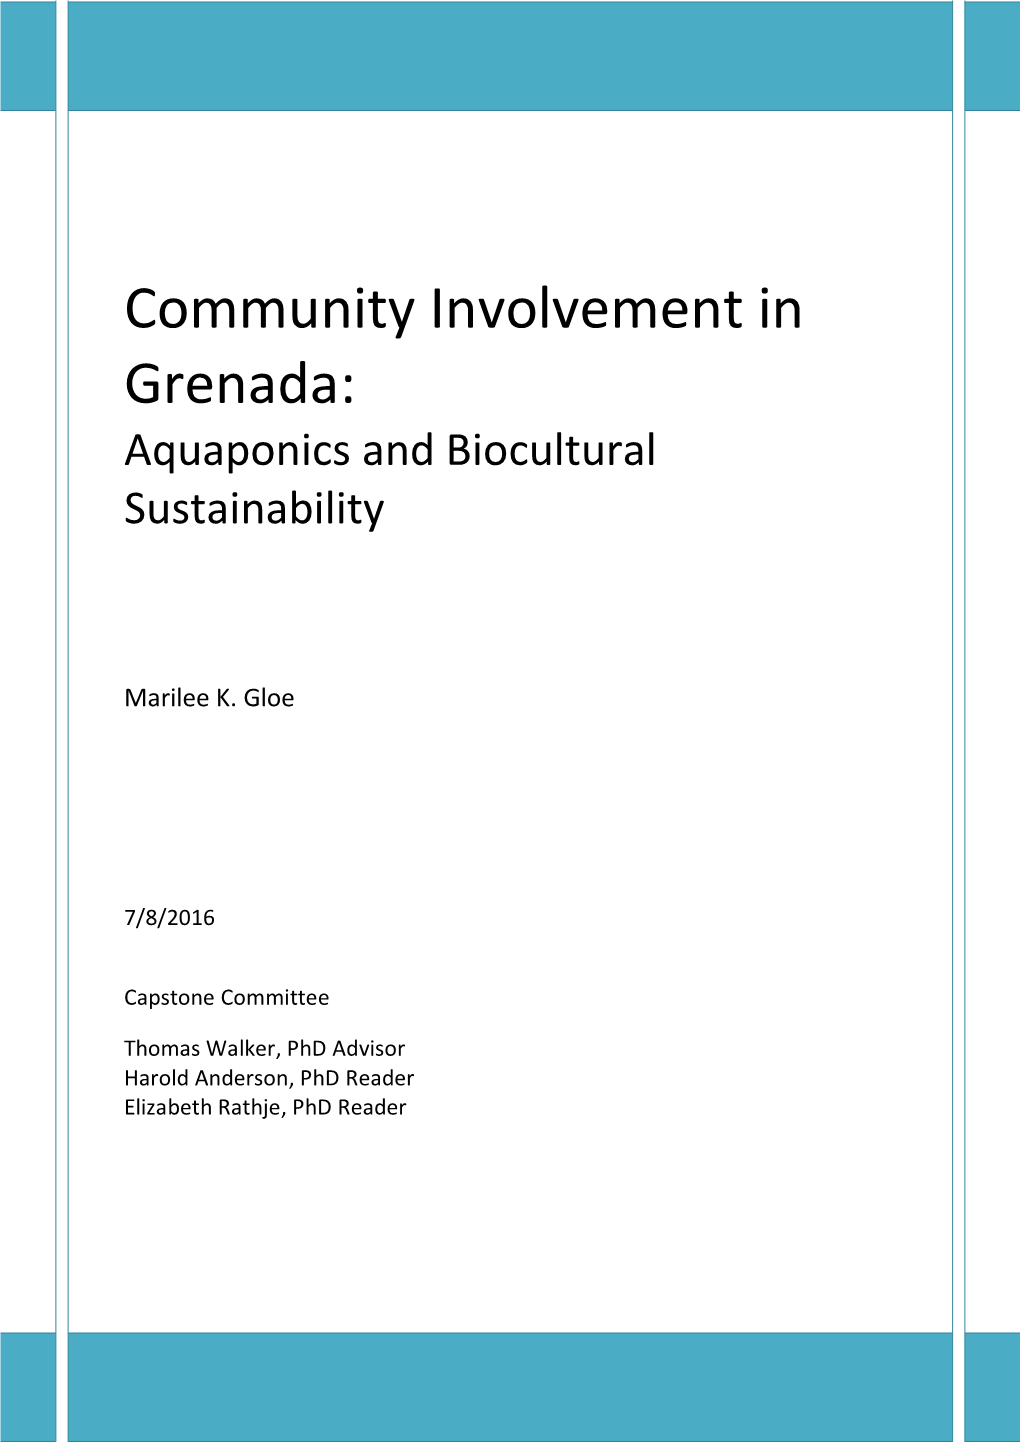 Community Involvement in Grenada: Aquaponics and Biocultural Sustainability